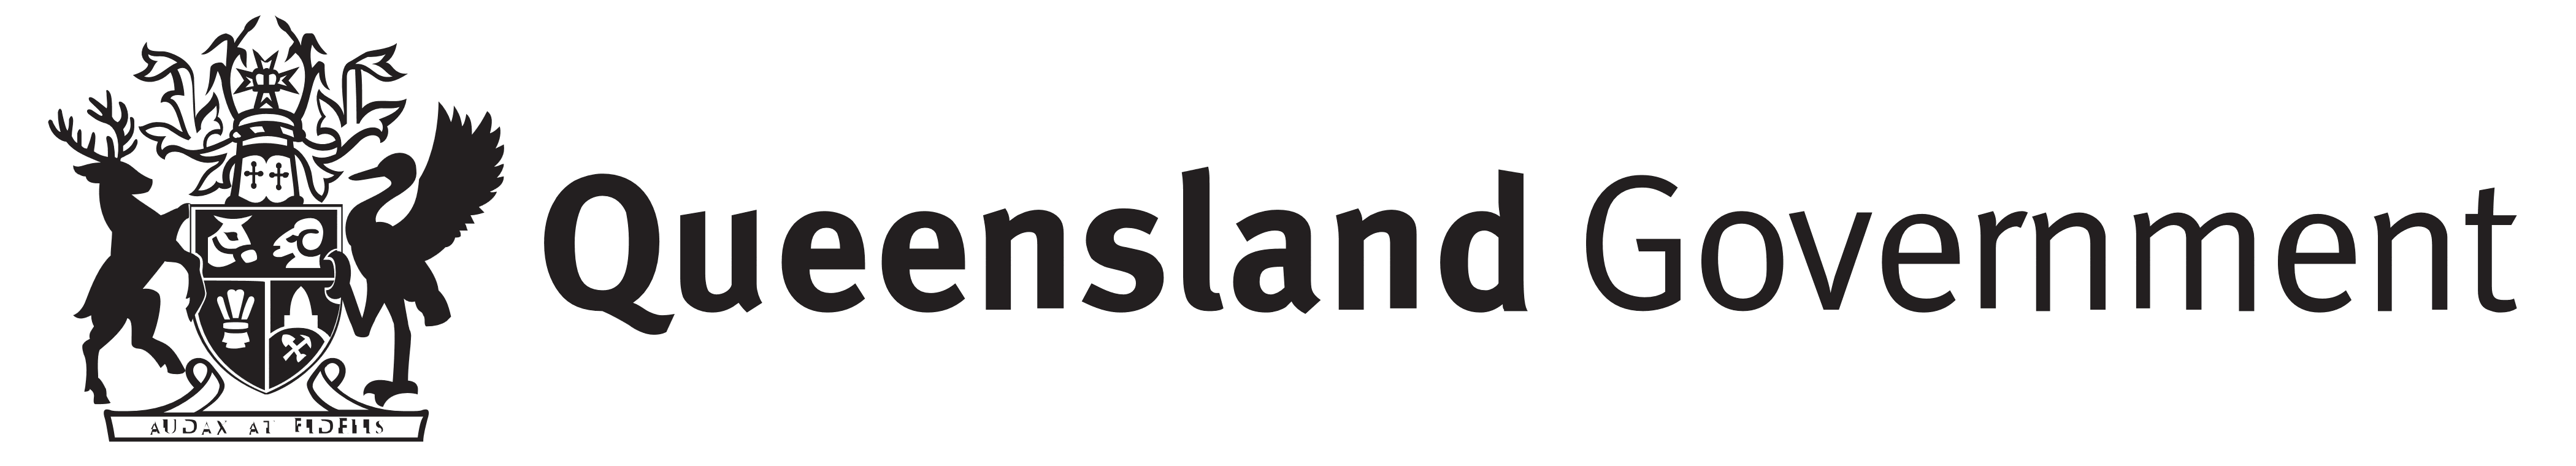 Queensland_Government_logo_logotype